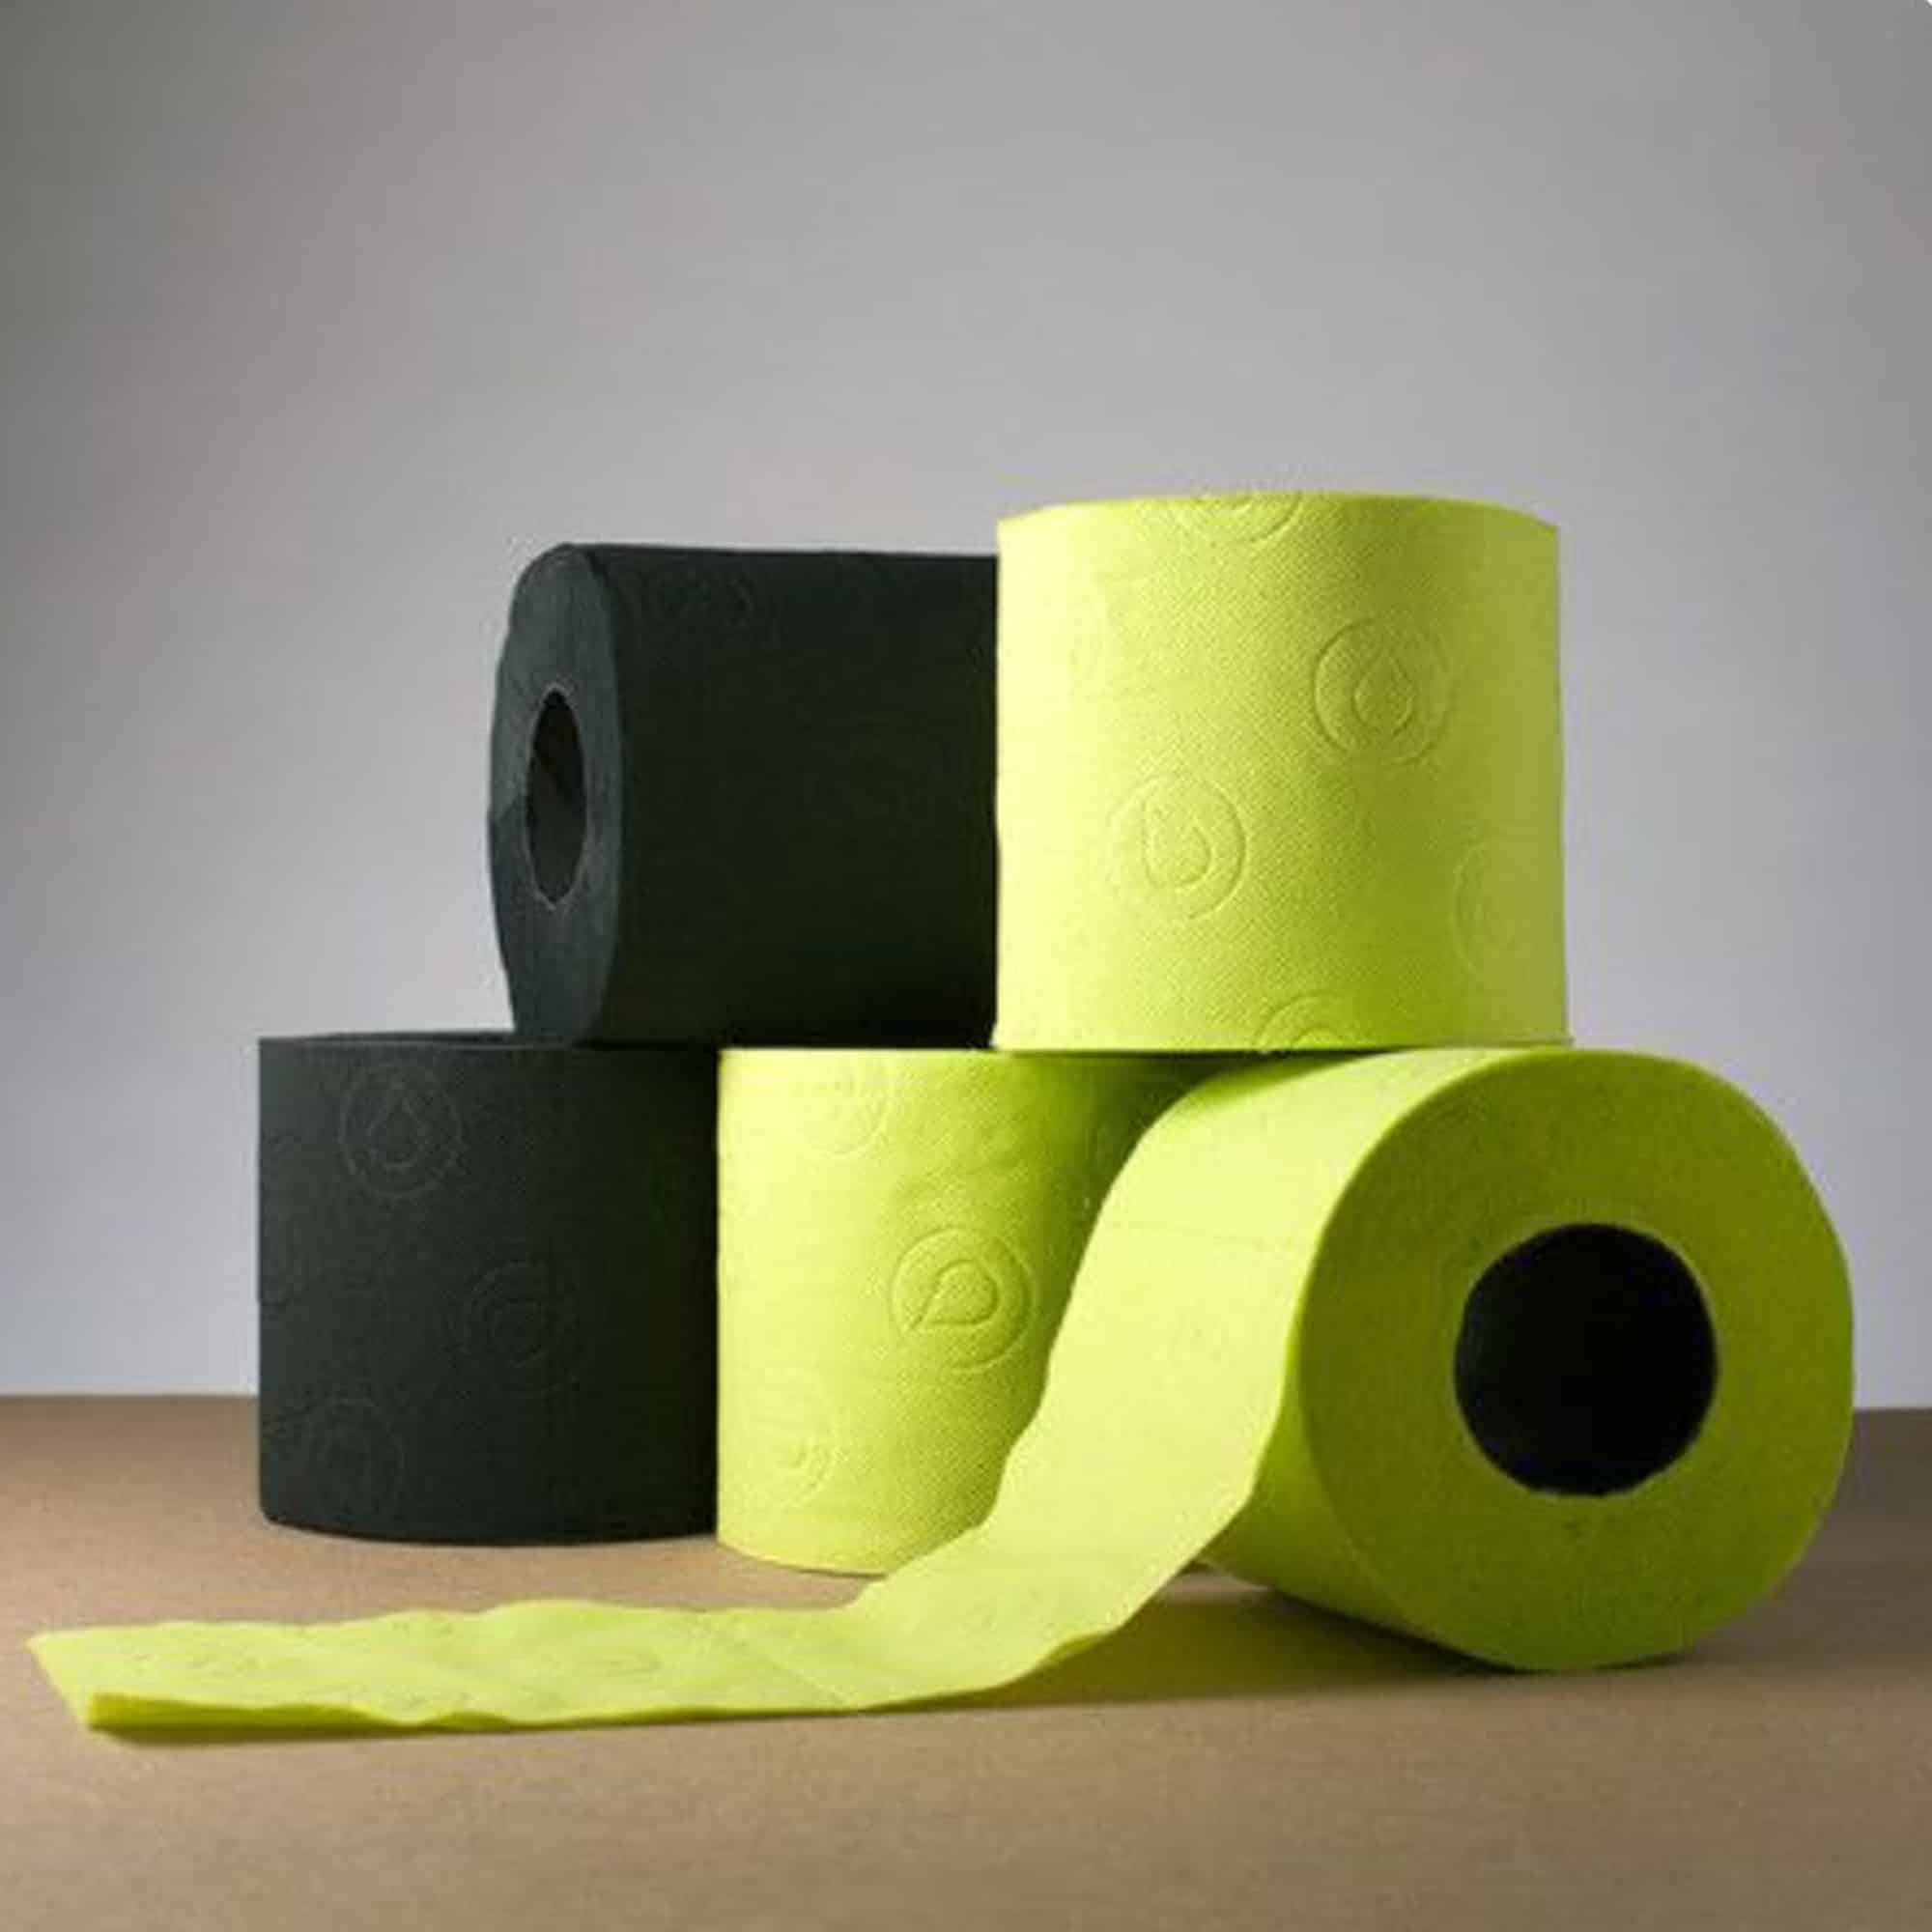 Renova Lime Green Jumbo Toilet Paper, 6 Rolls, 180 Sheets Per Roll